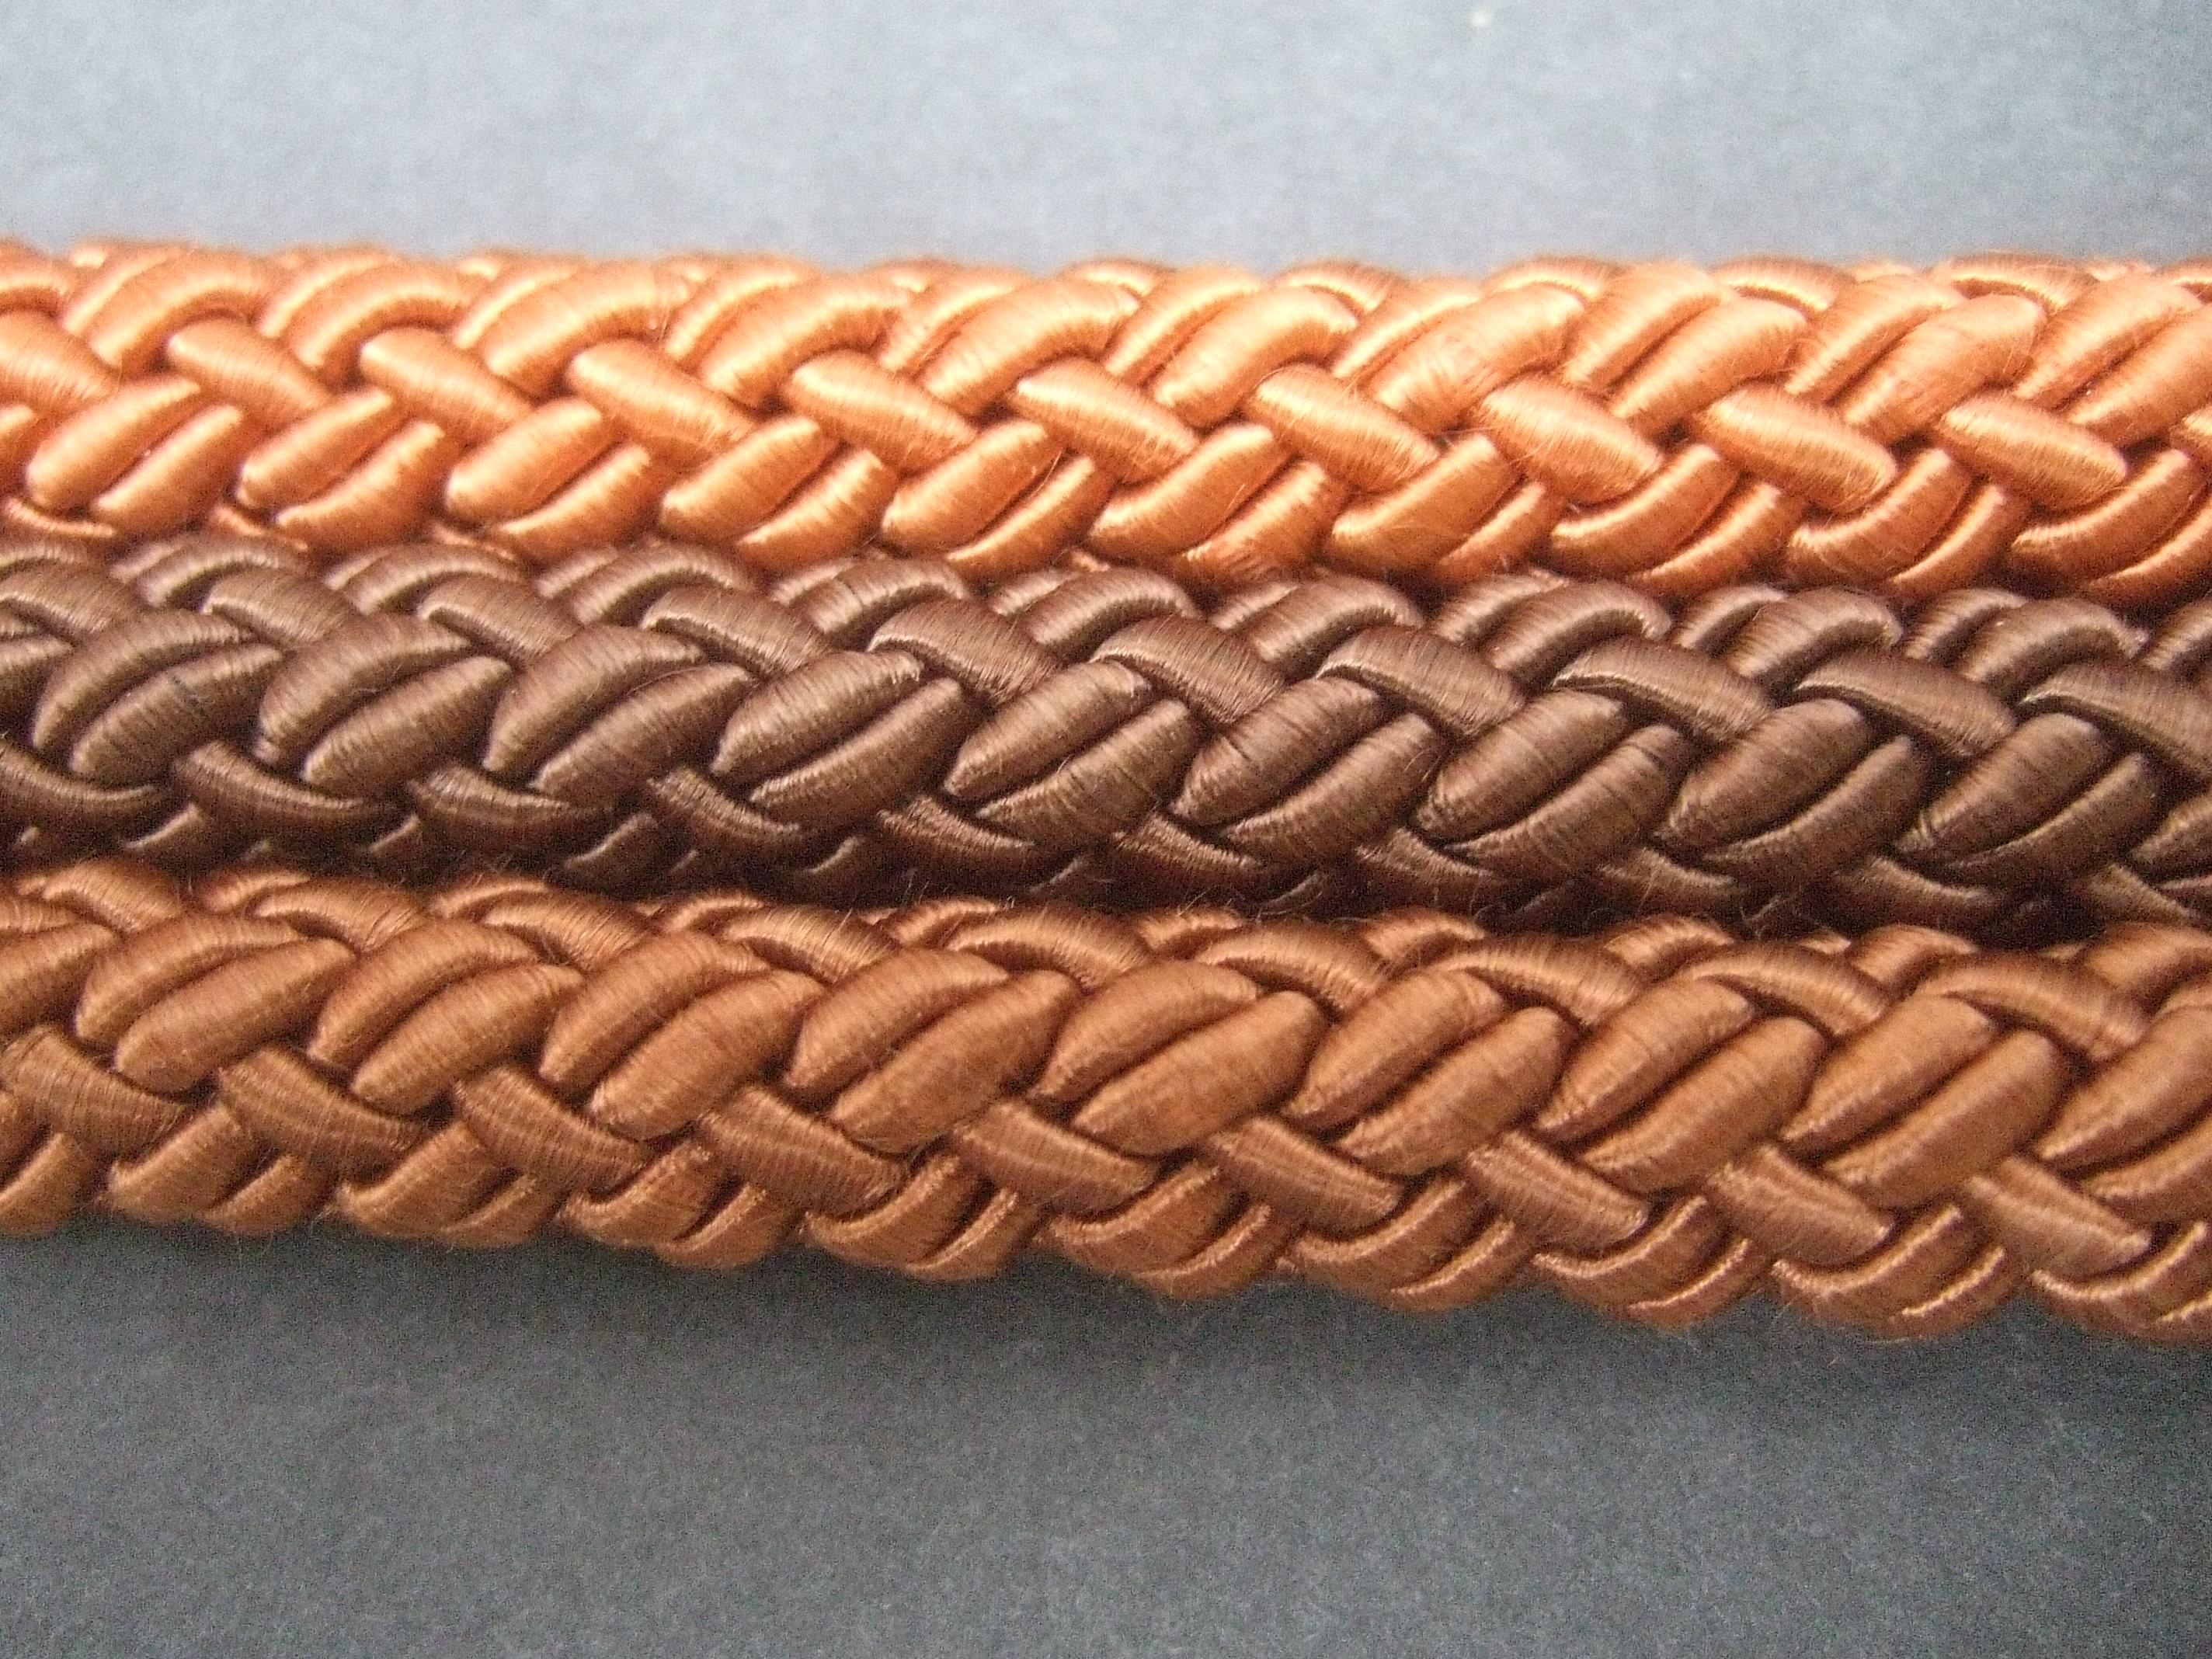 Yves Saint Laurent Paris Metallic Brown Leather Rope Belt c 1980s 2